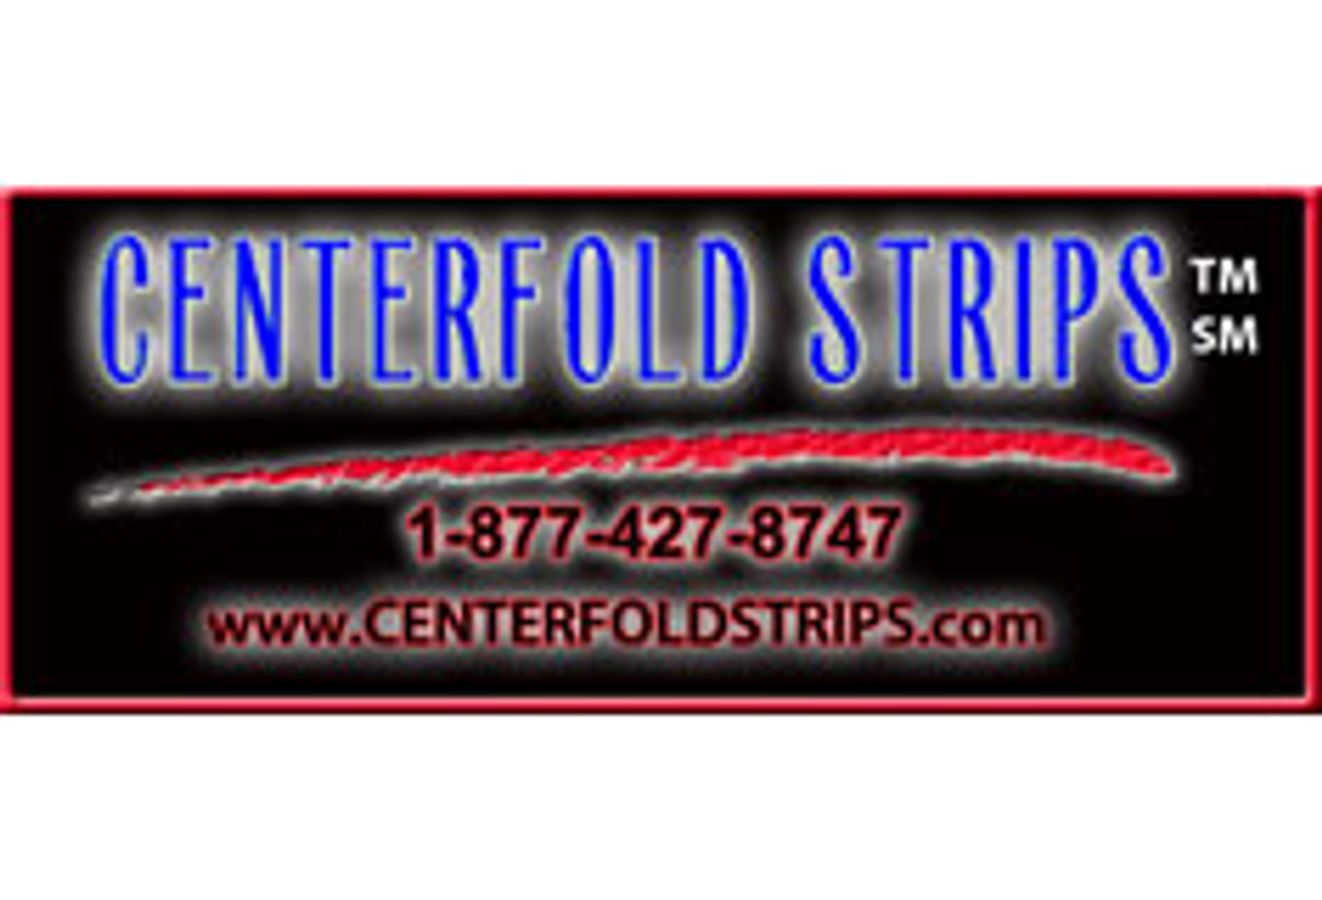 Centerfold Strips